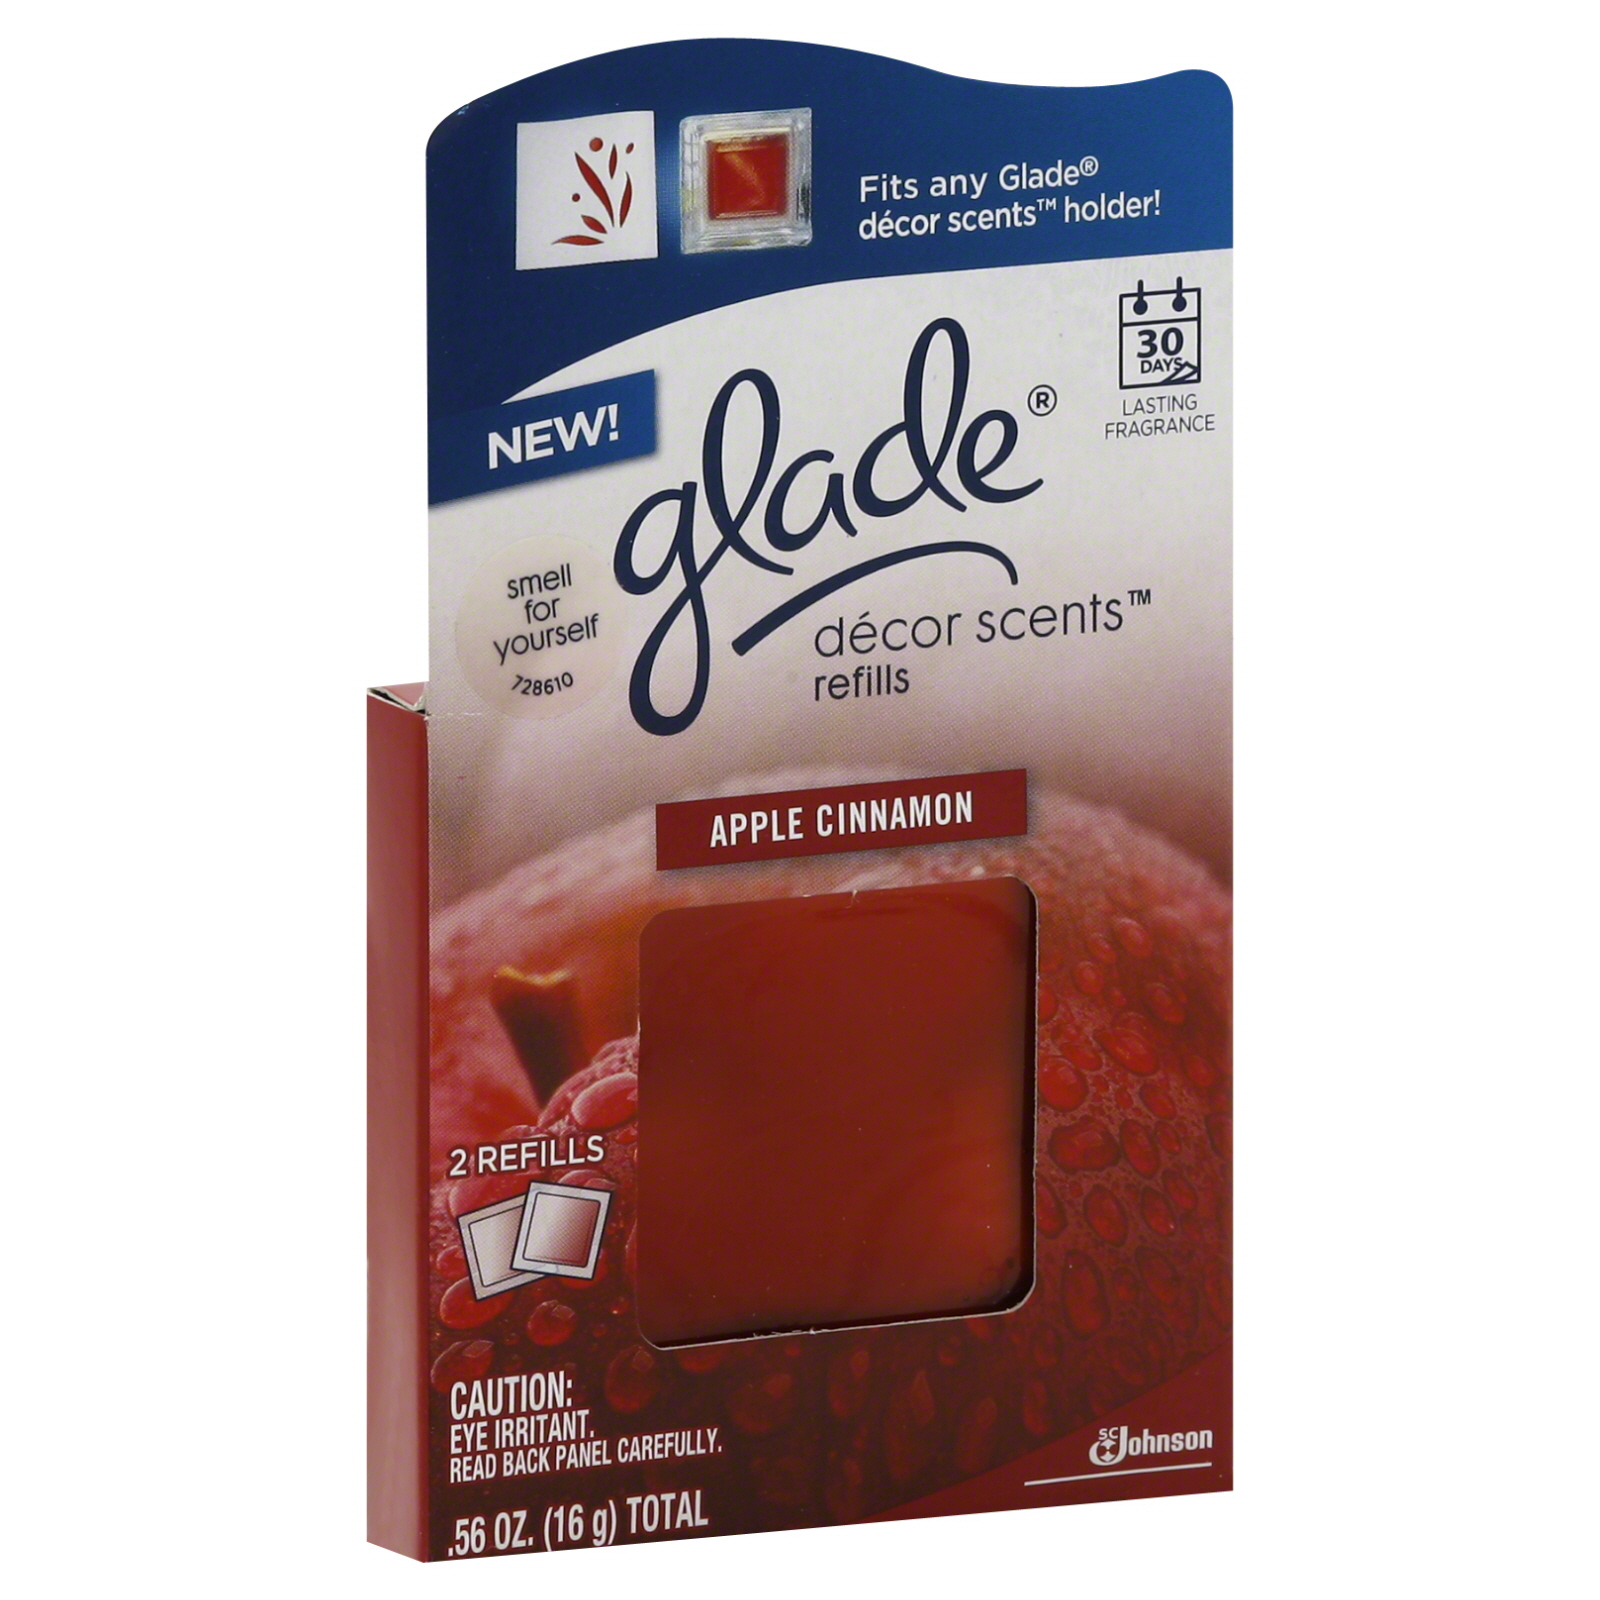 Glade Decor Scents Refills, Apple Cinnamon 2 refills [0.56 oz (16 g)]